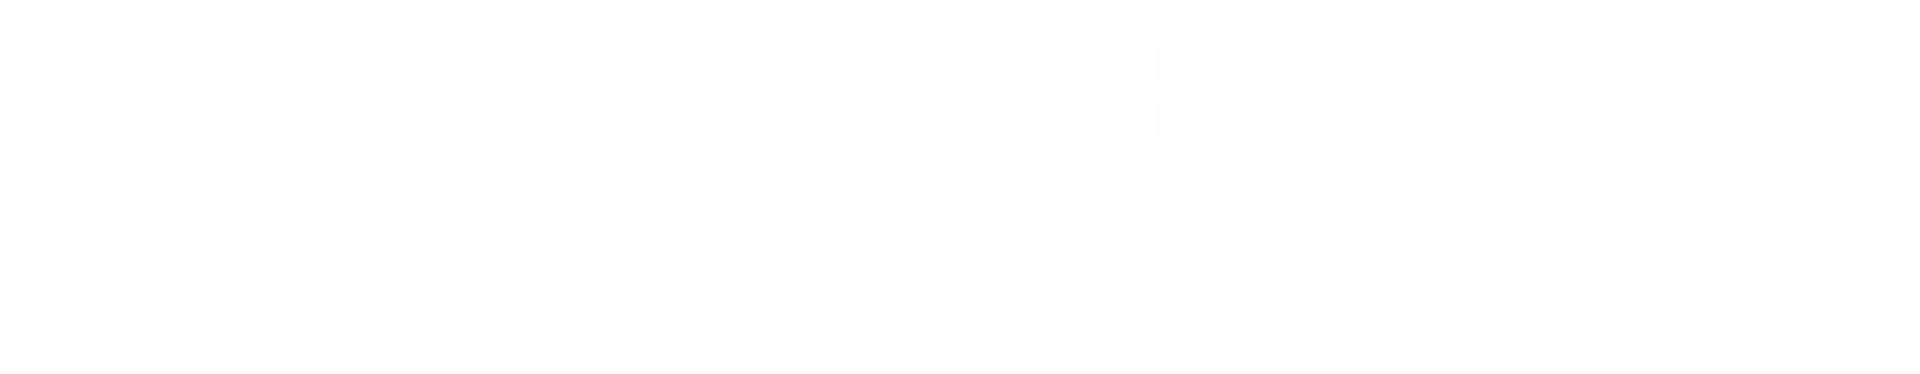 Index Fund Insiders logo